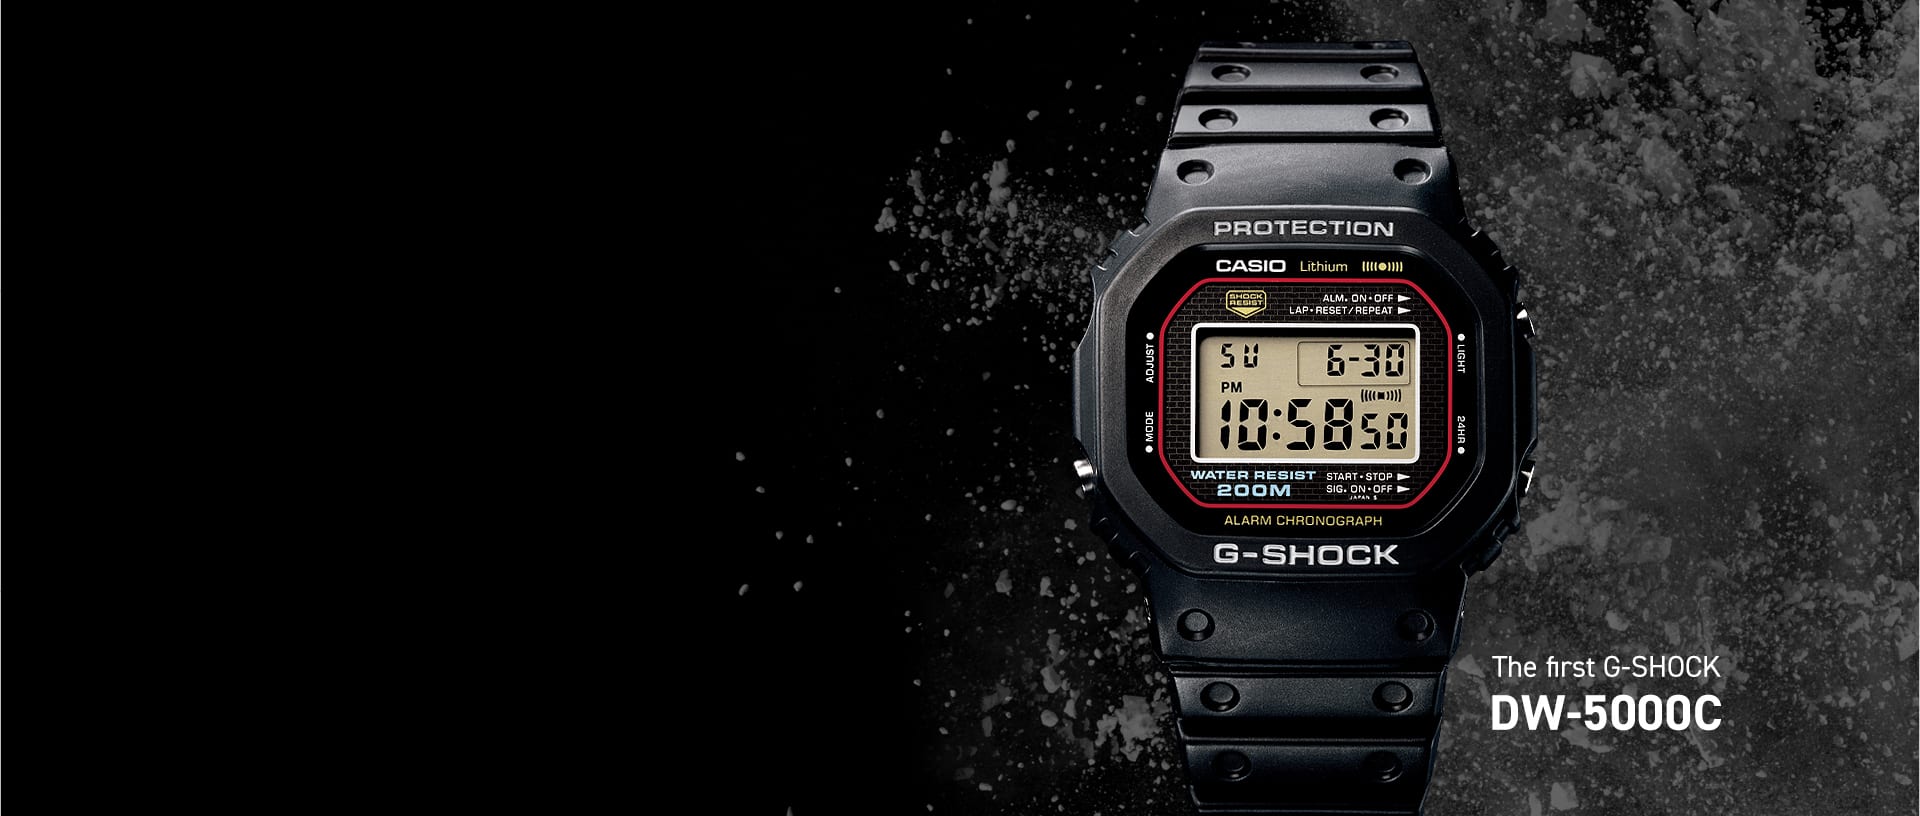 DW5000C G-SHOCK watch